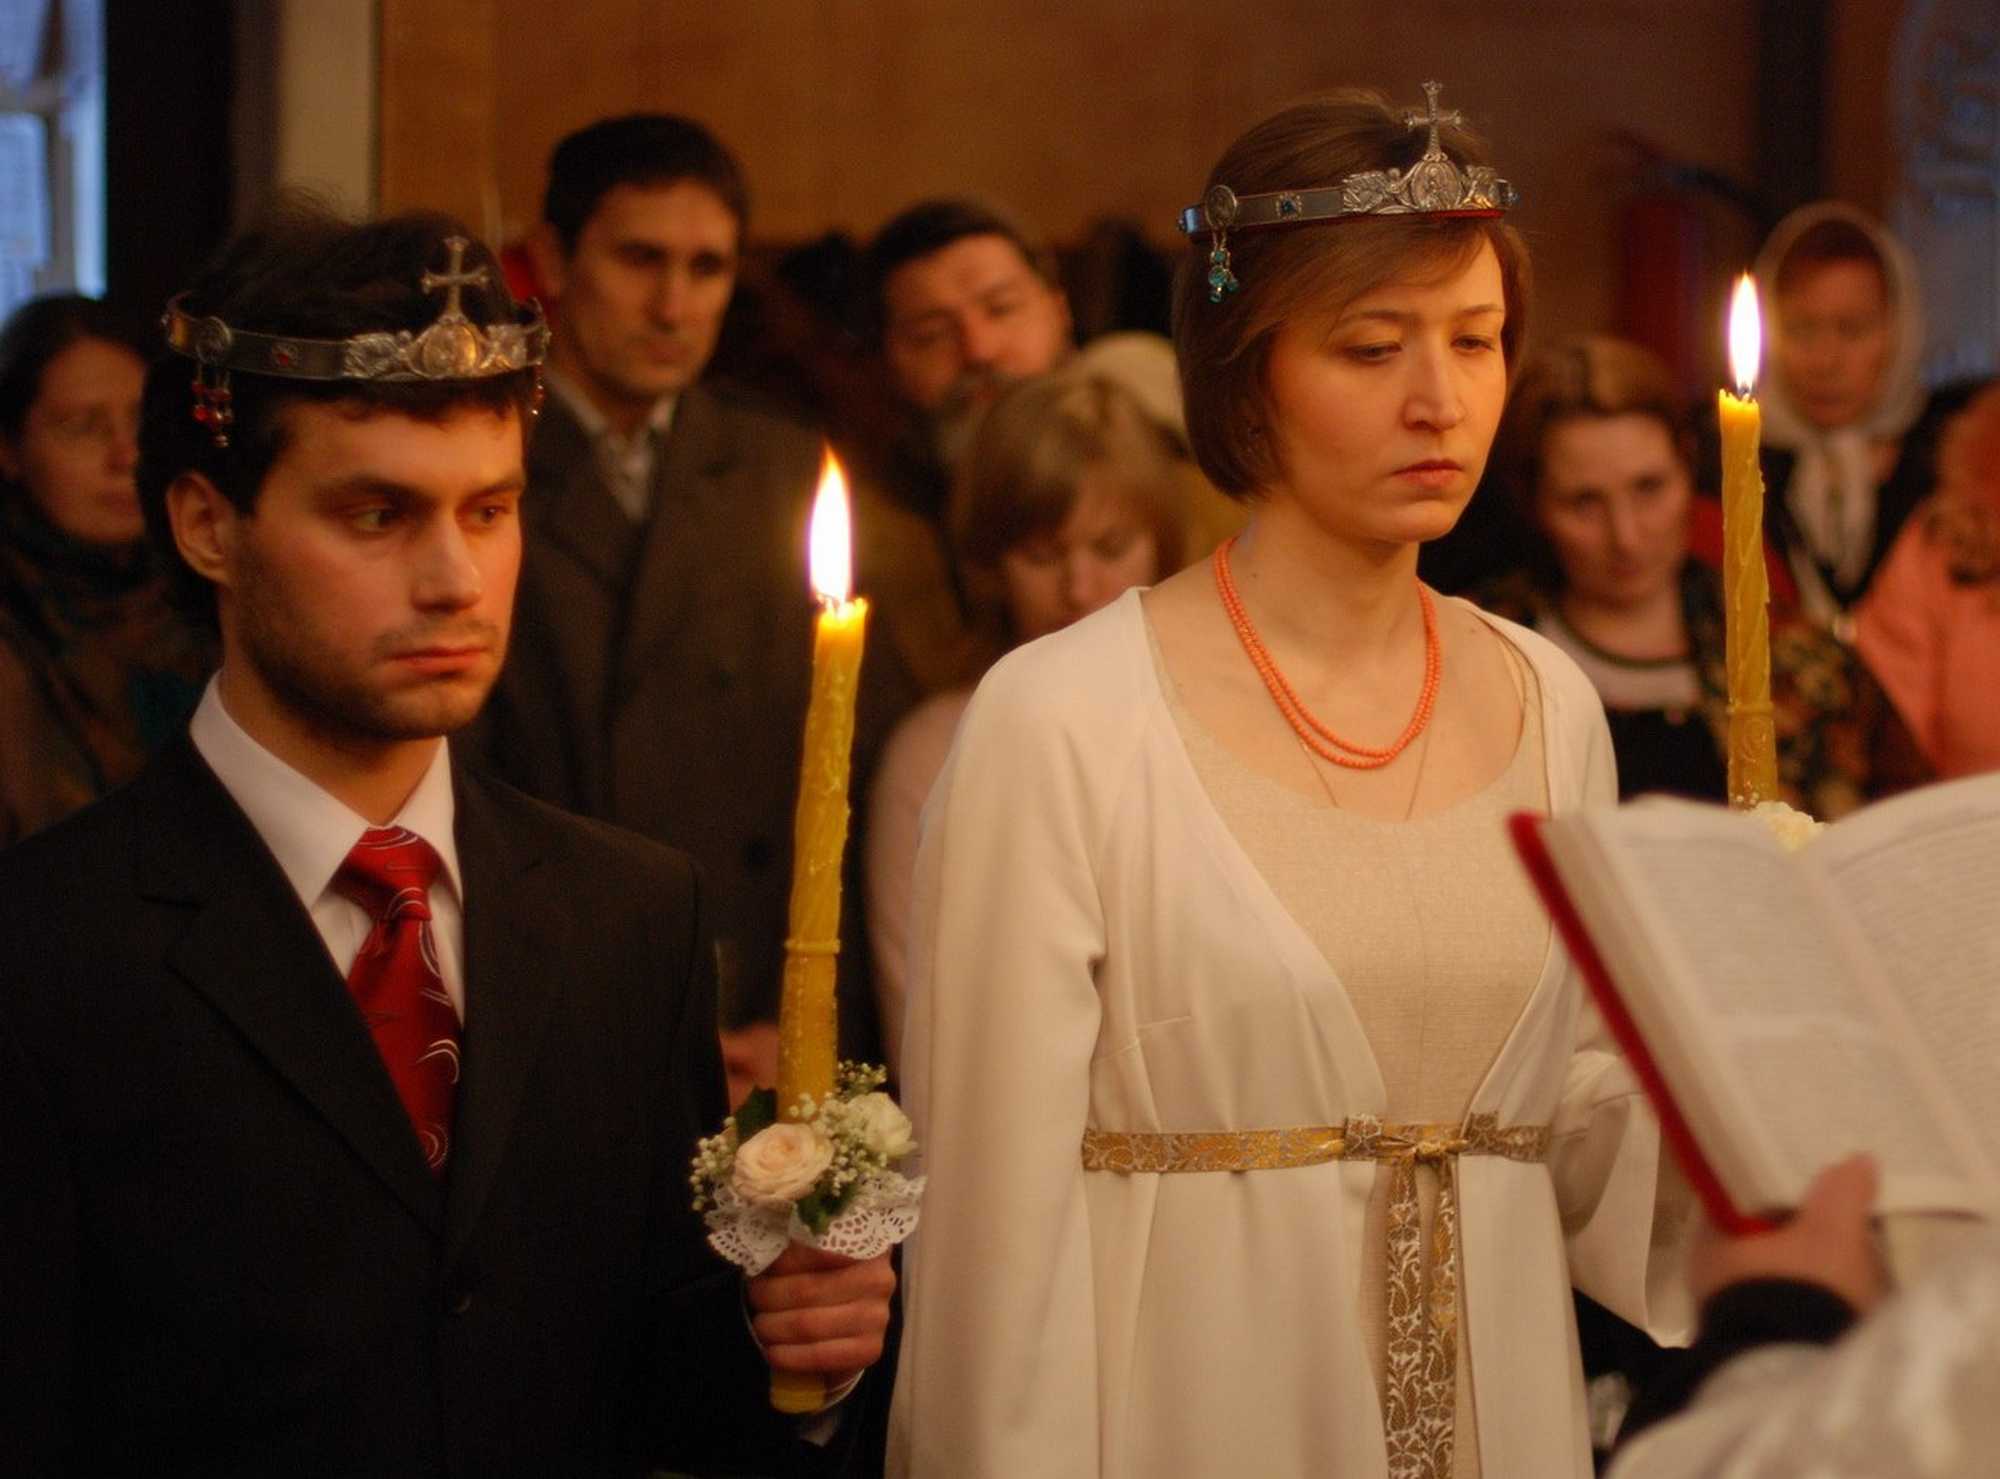 Фотогалерея венчаний в Феодоровском соборе